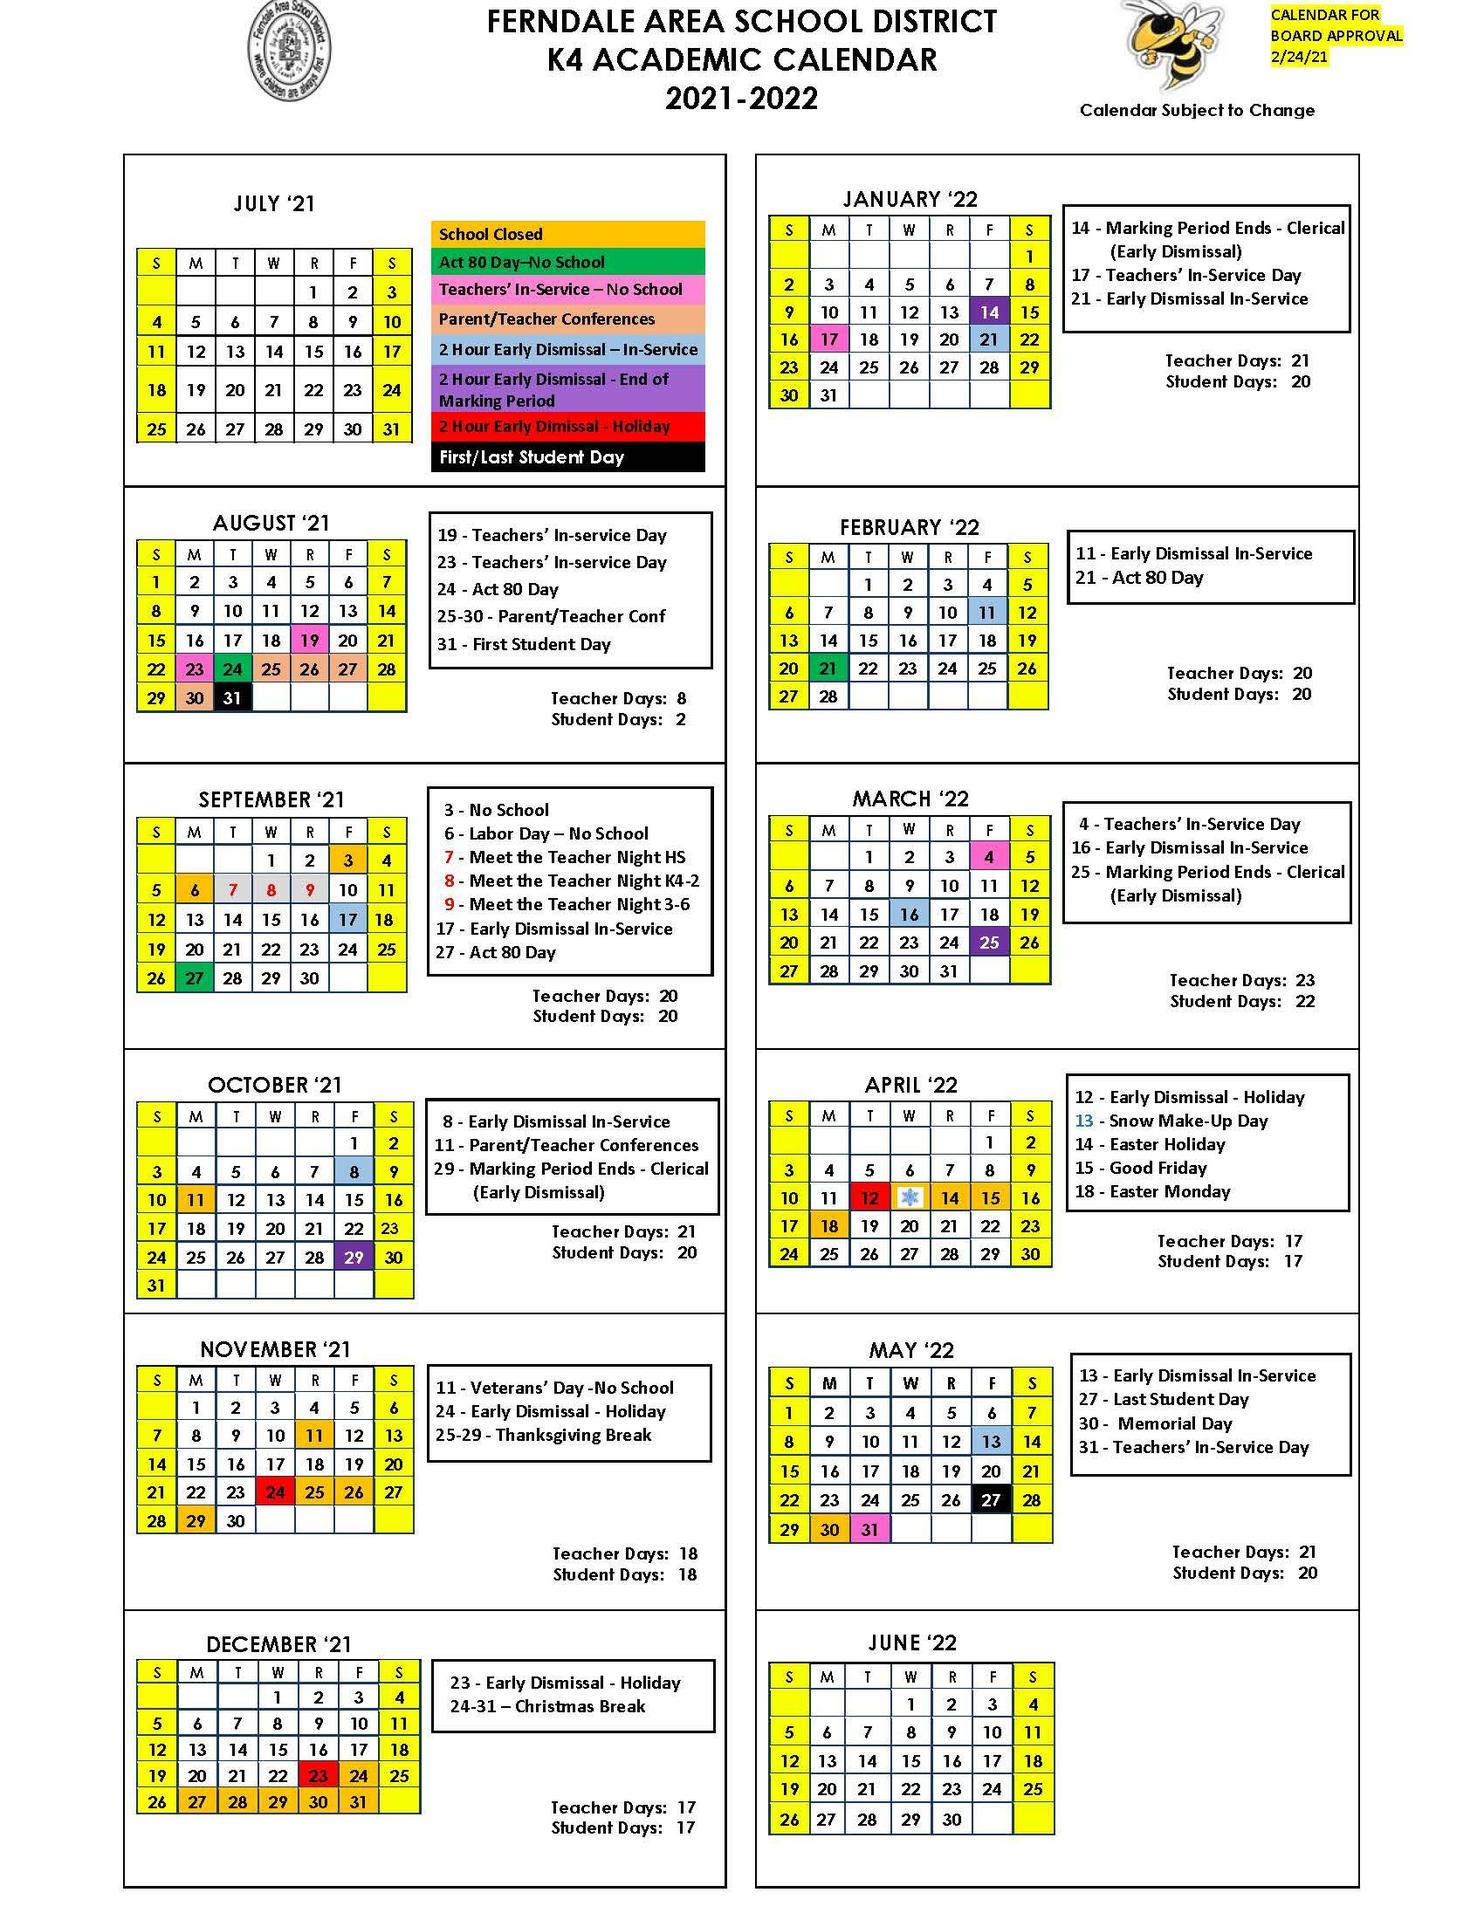 Duquesne Academic Calendar 2022